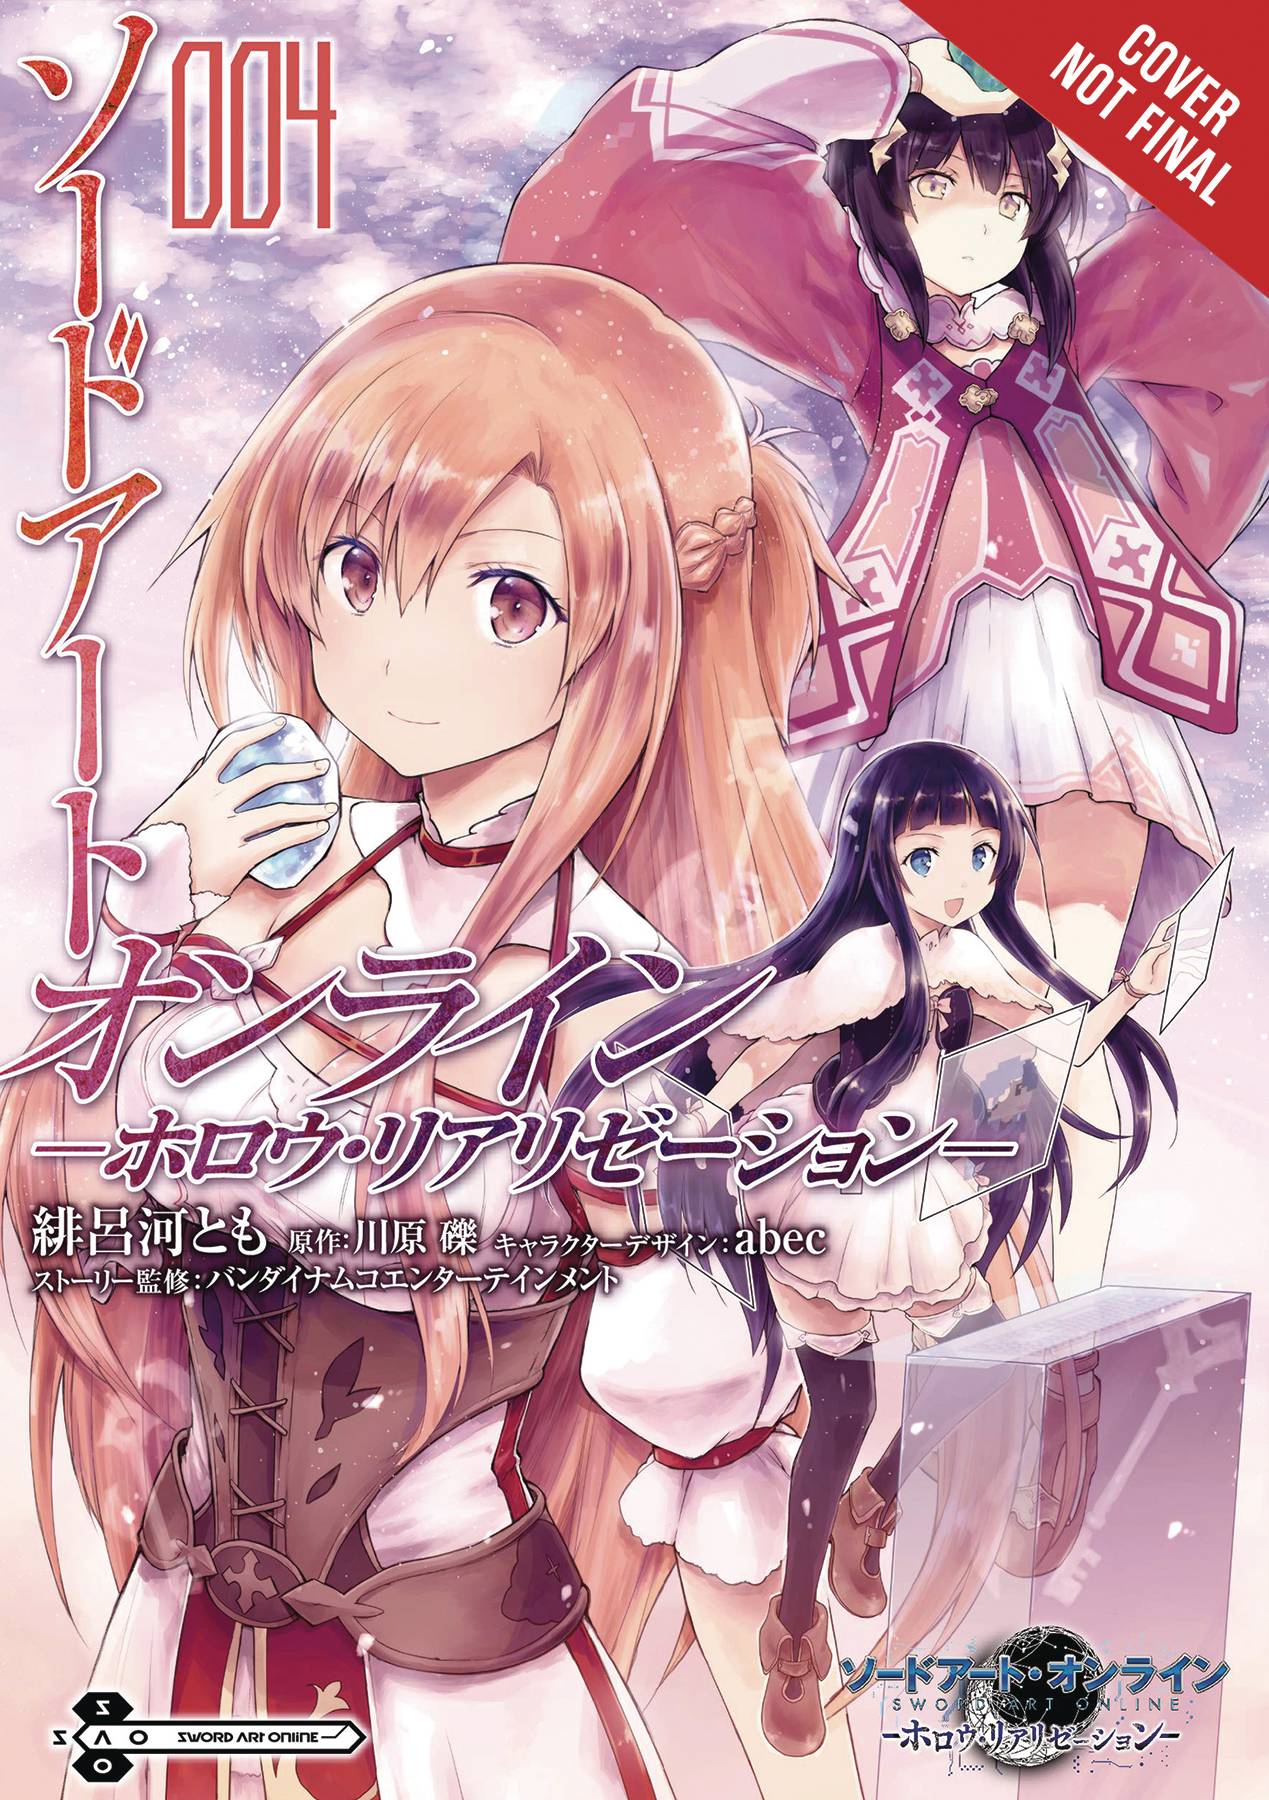 Sword Art Online Hollow Realization Manga Volume 4